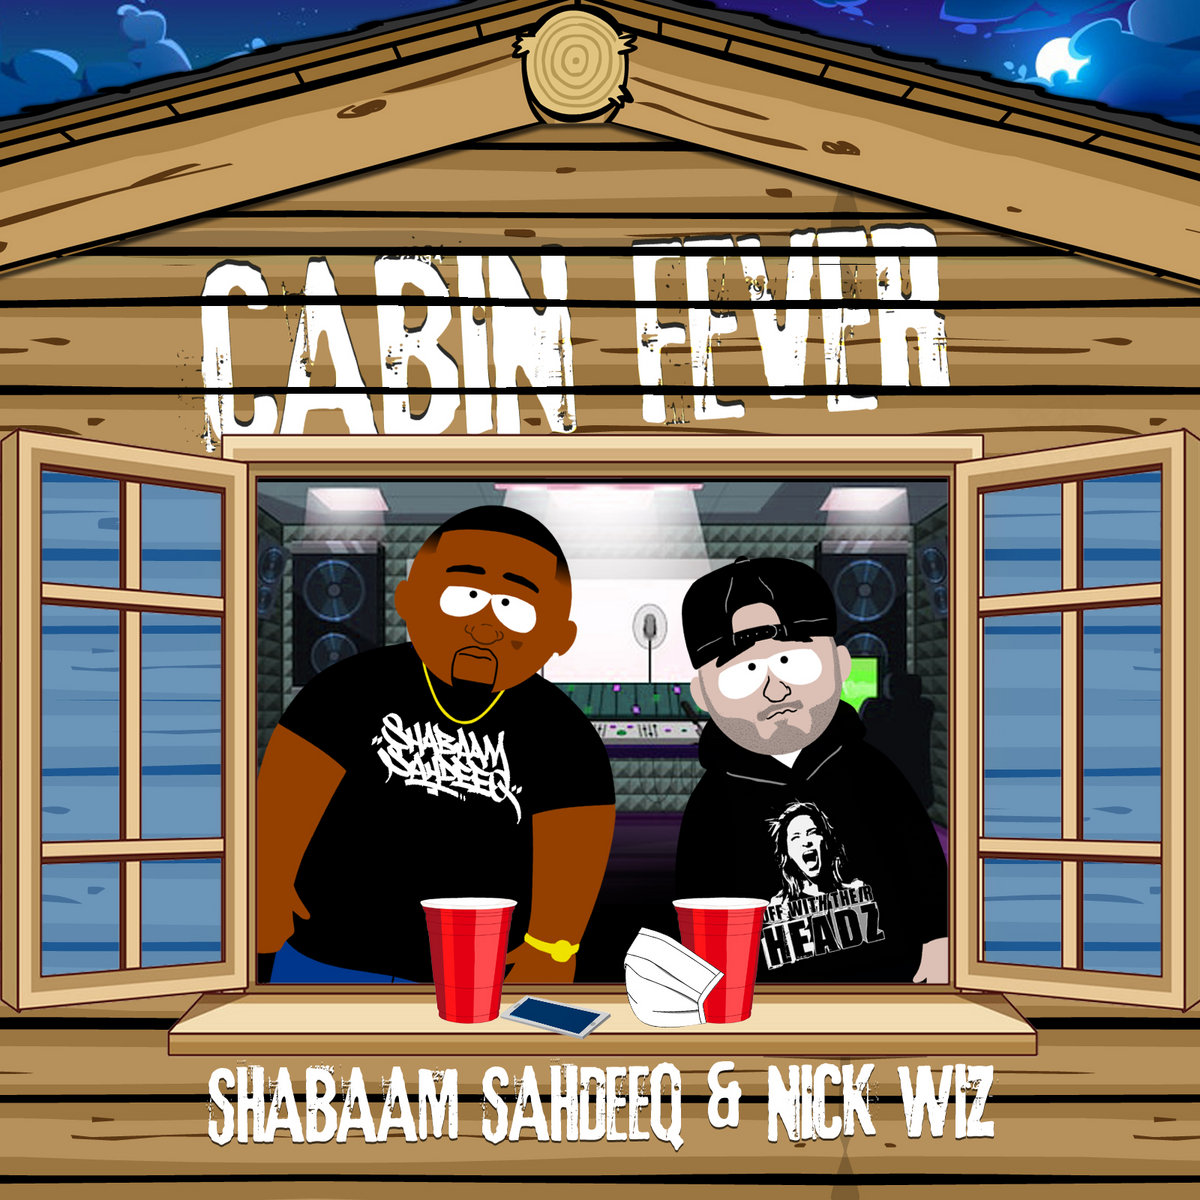 Cabin_fever_by_shabaam_sahdeeq___nick_wiz